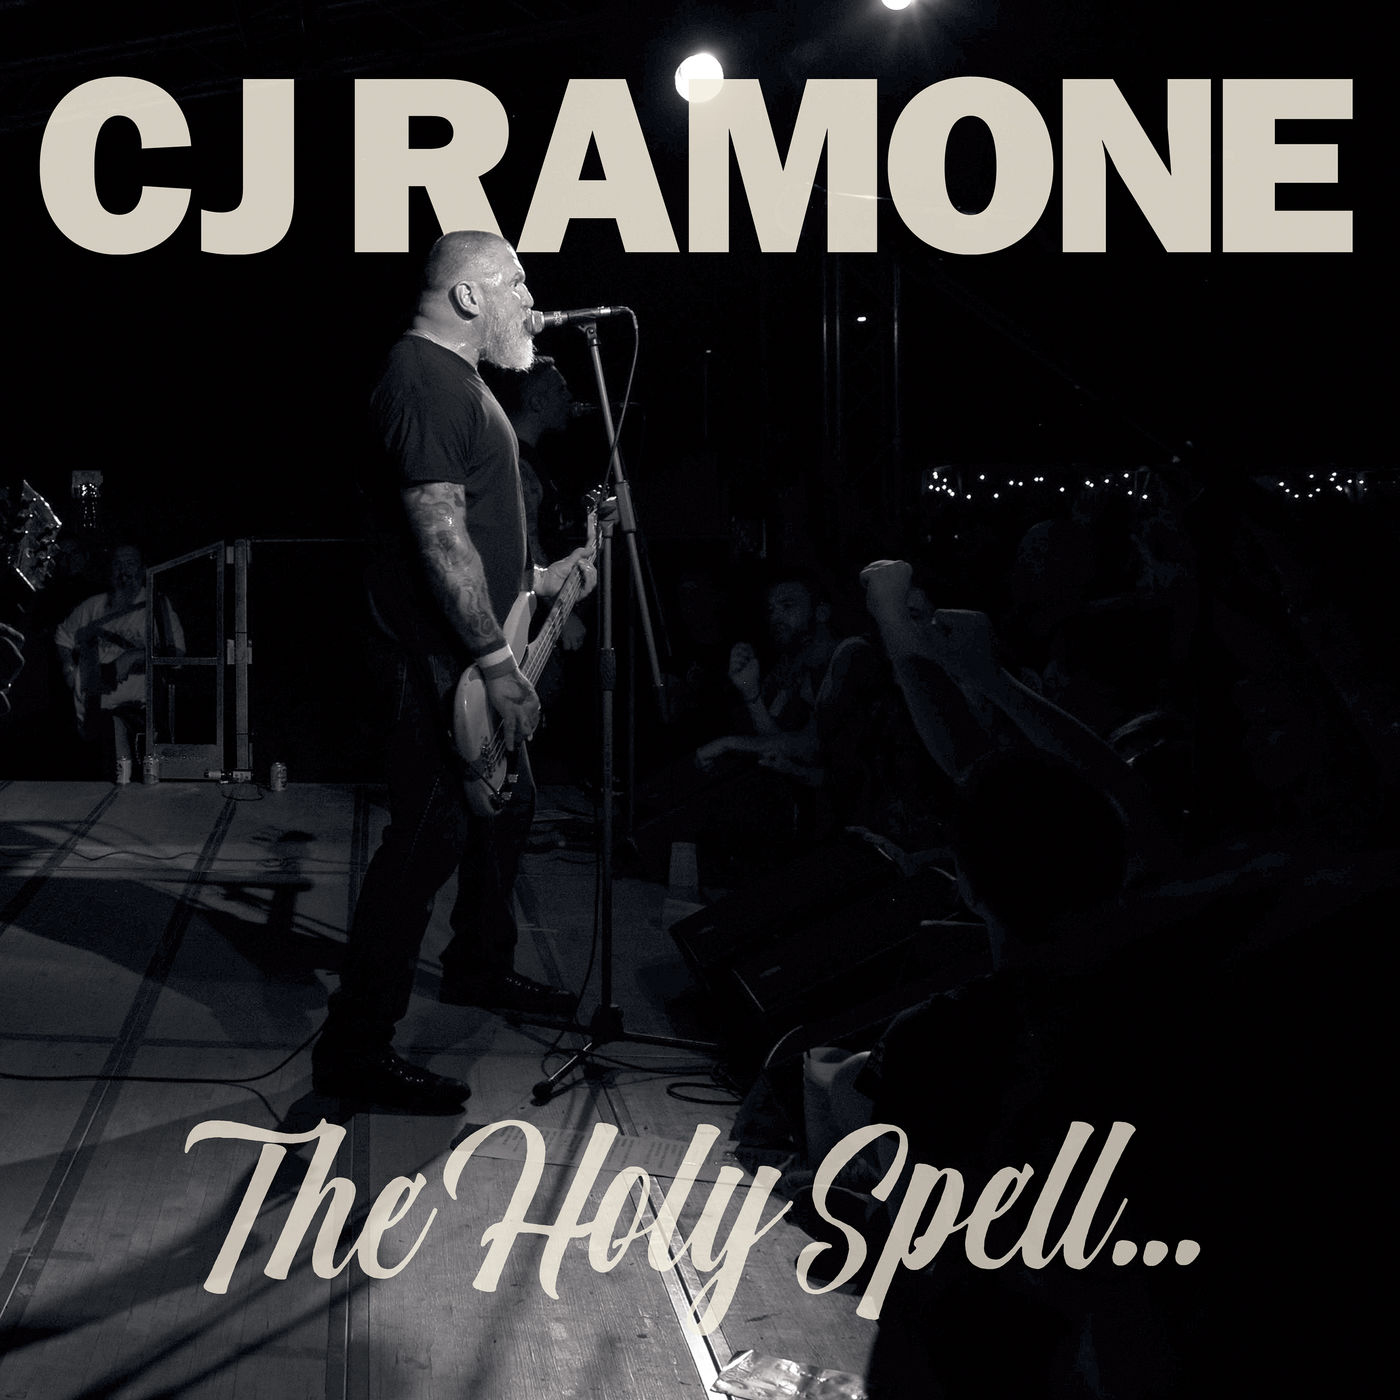 CJ Ramone - The Holy Spell... (2019)